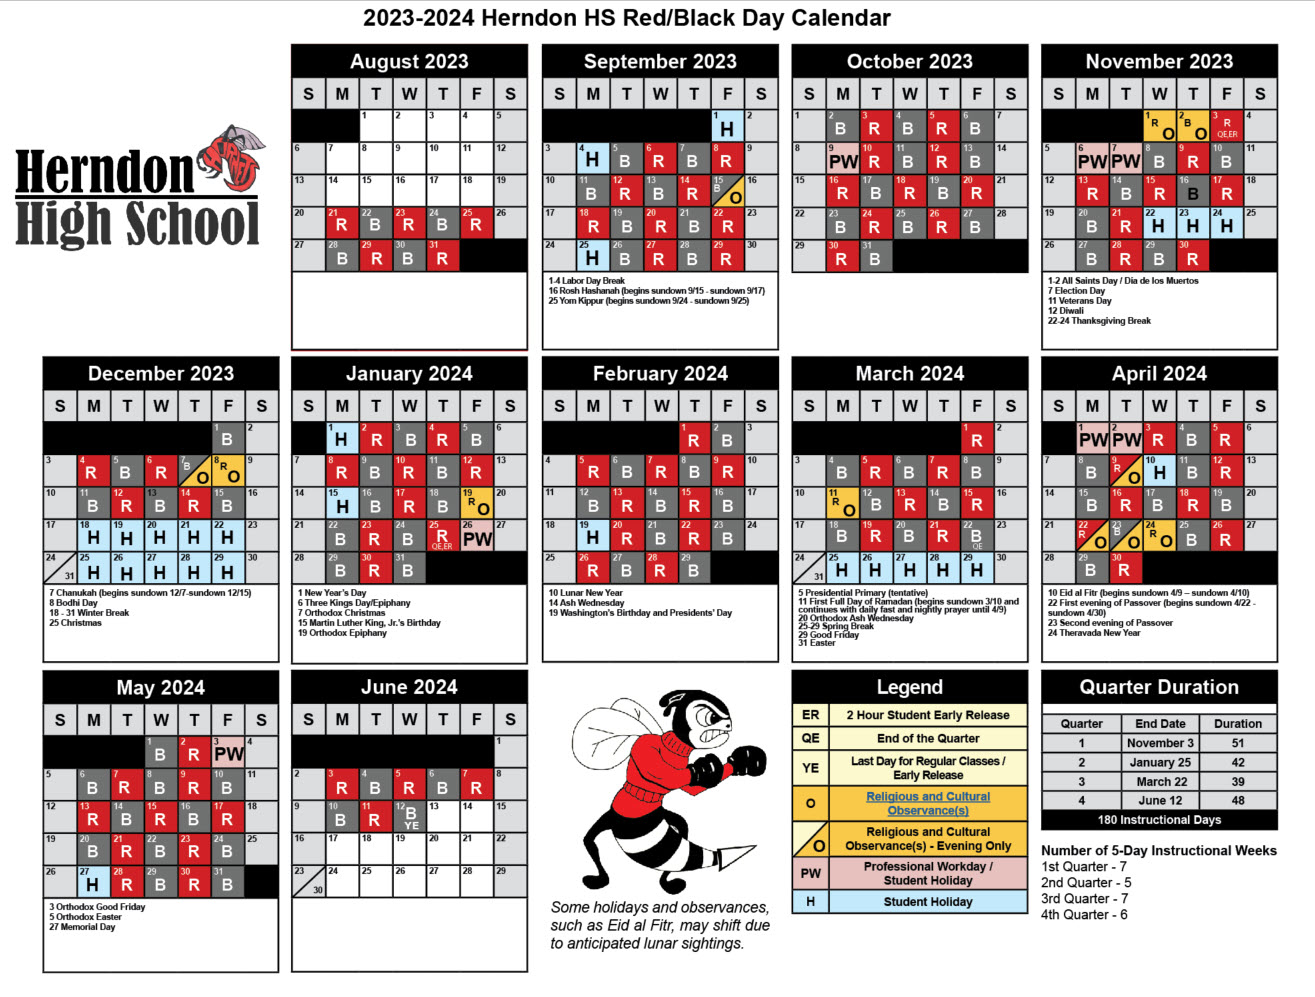 Herndon High School 23-24 Rotation Calendar